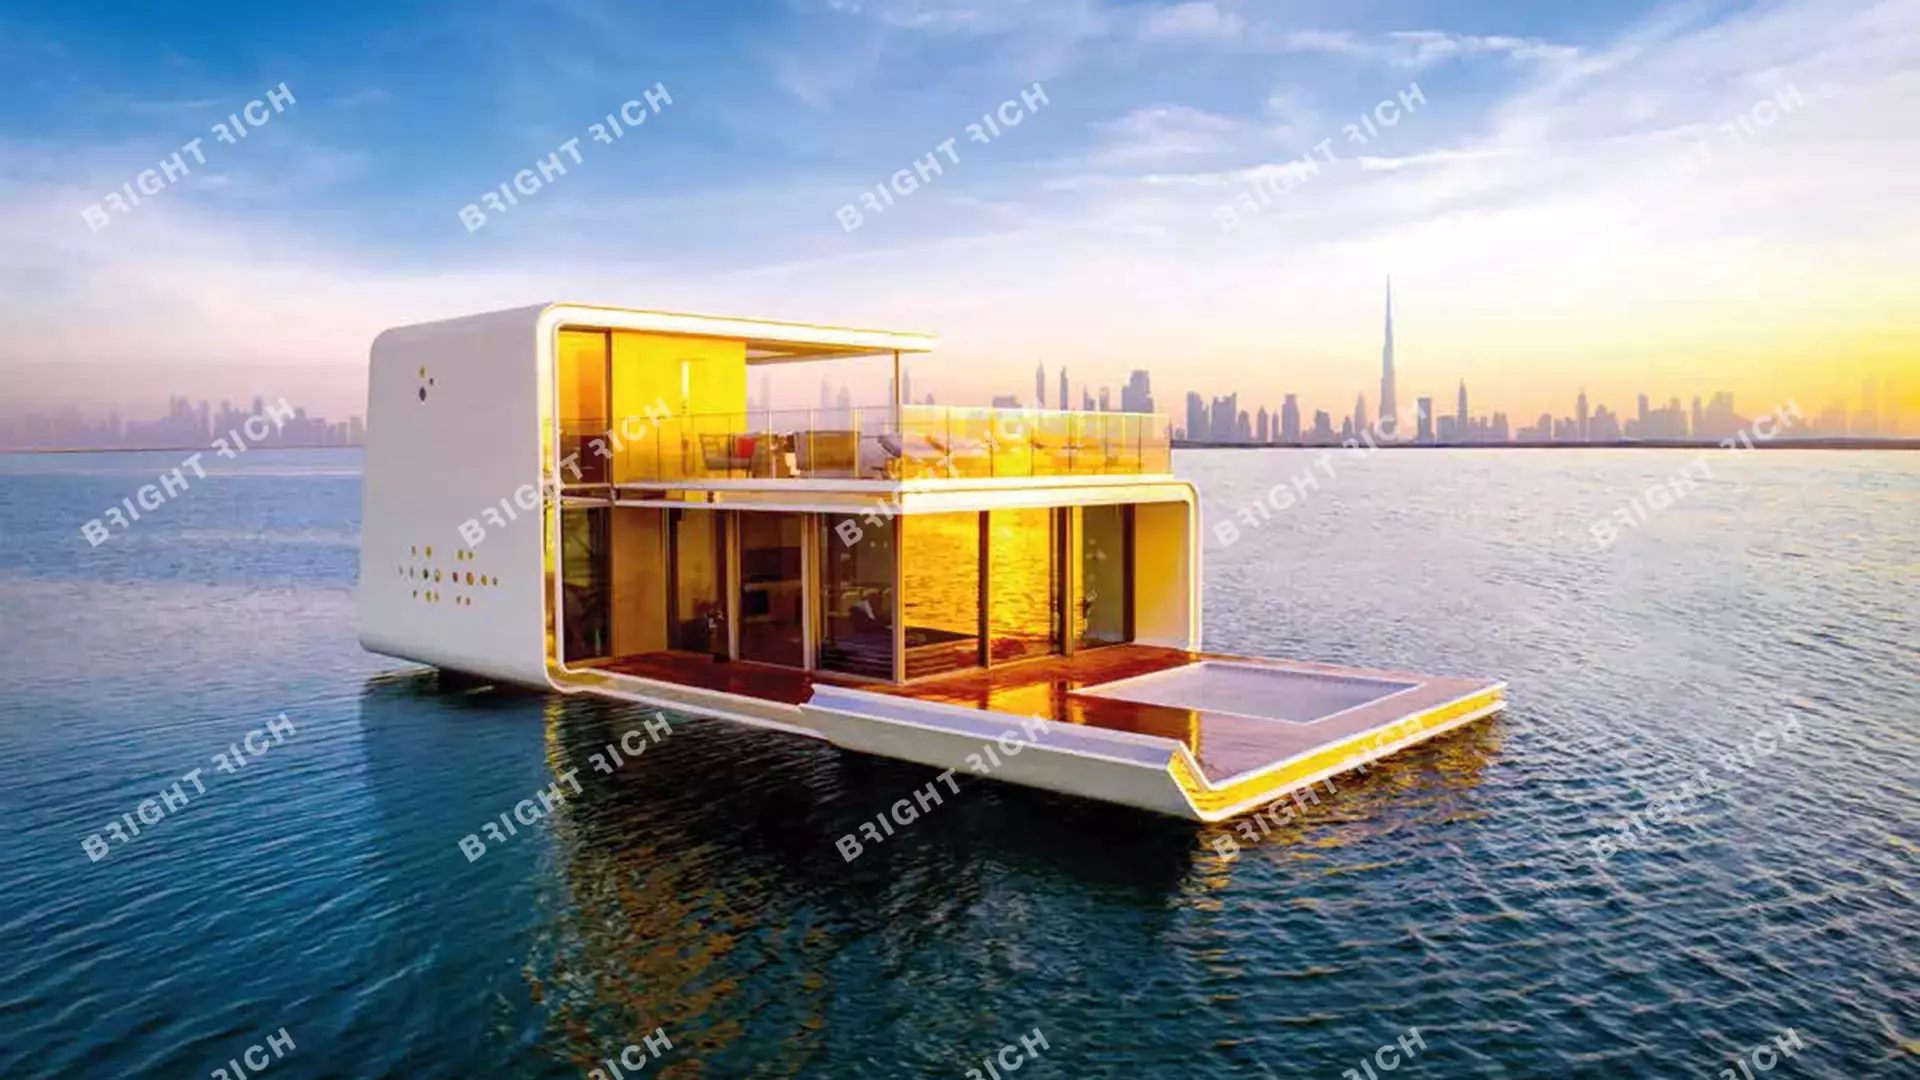 The Floating Seahorse, апарт-комплекс в Дубае